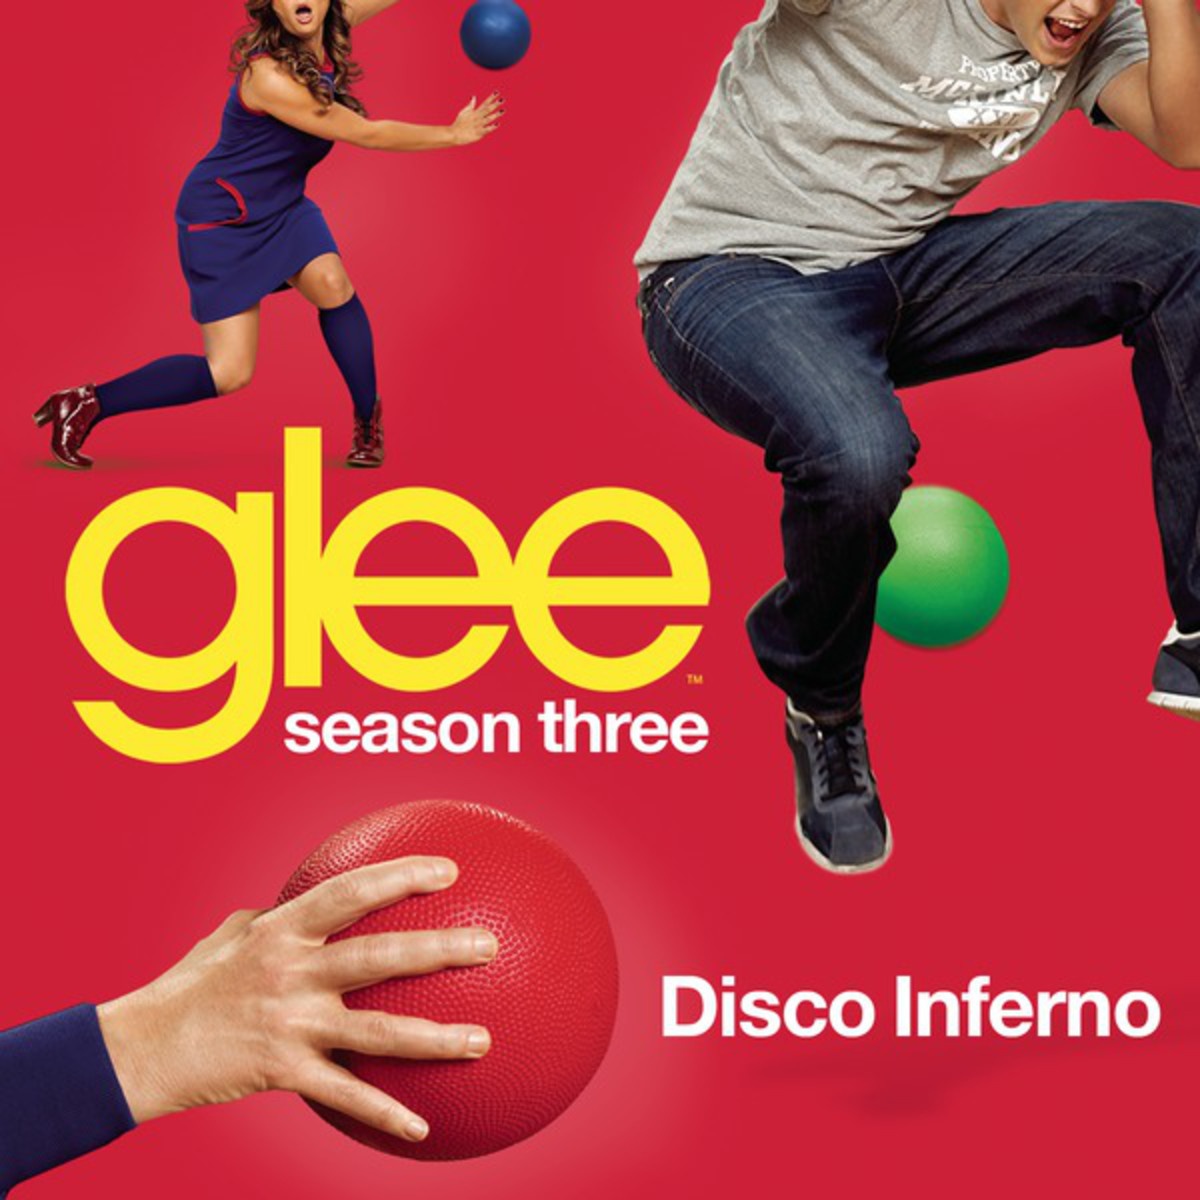 Disco Inferno (Glee Cast Version)